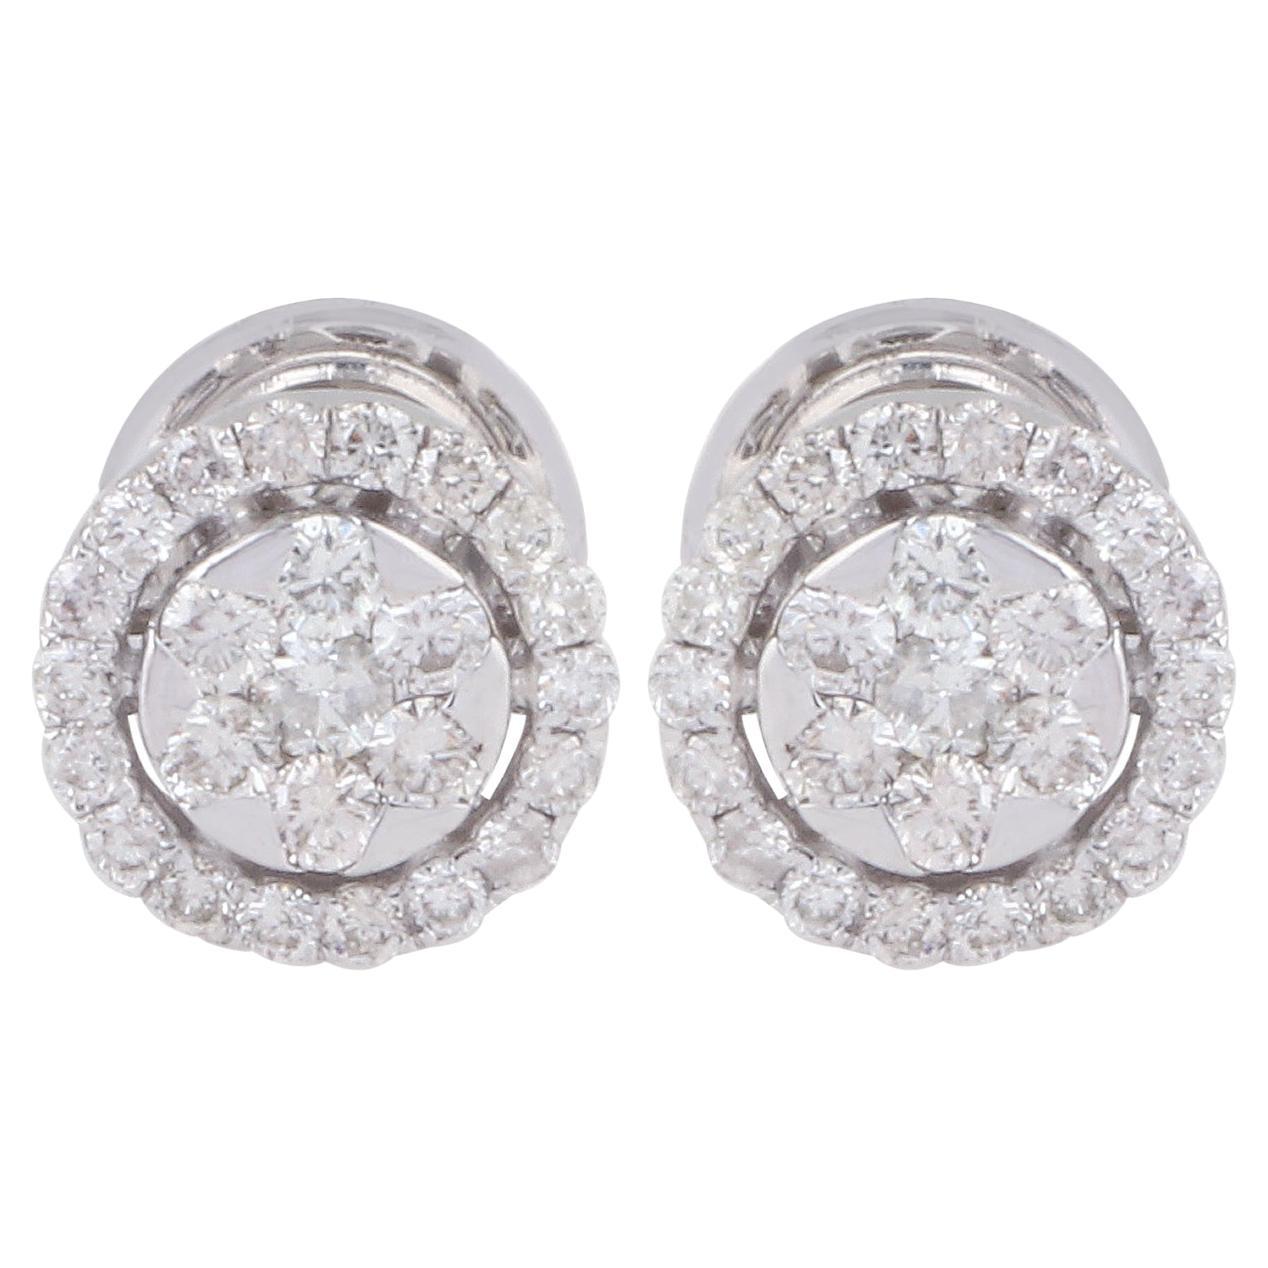 0.60 Carat SI Clarity HI Color Diamond Stud Earrings 18 Karat White Gold Jewelry